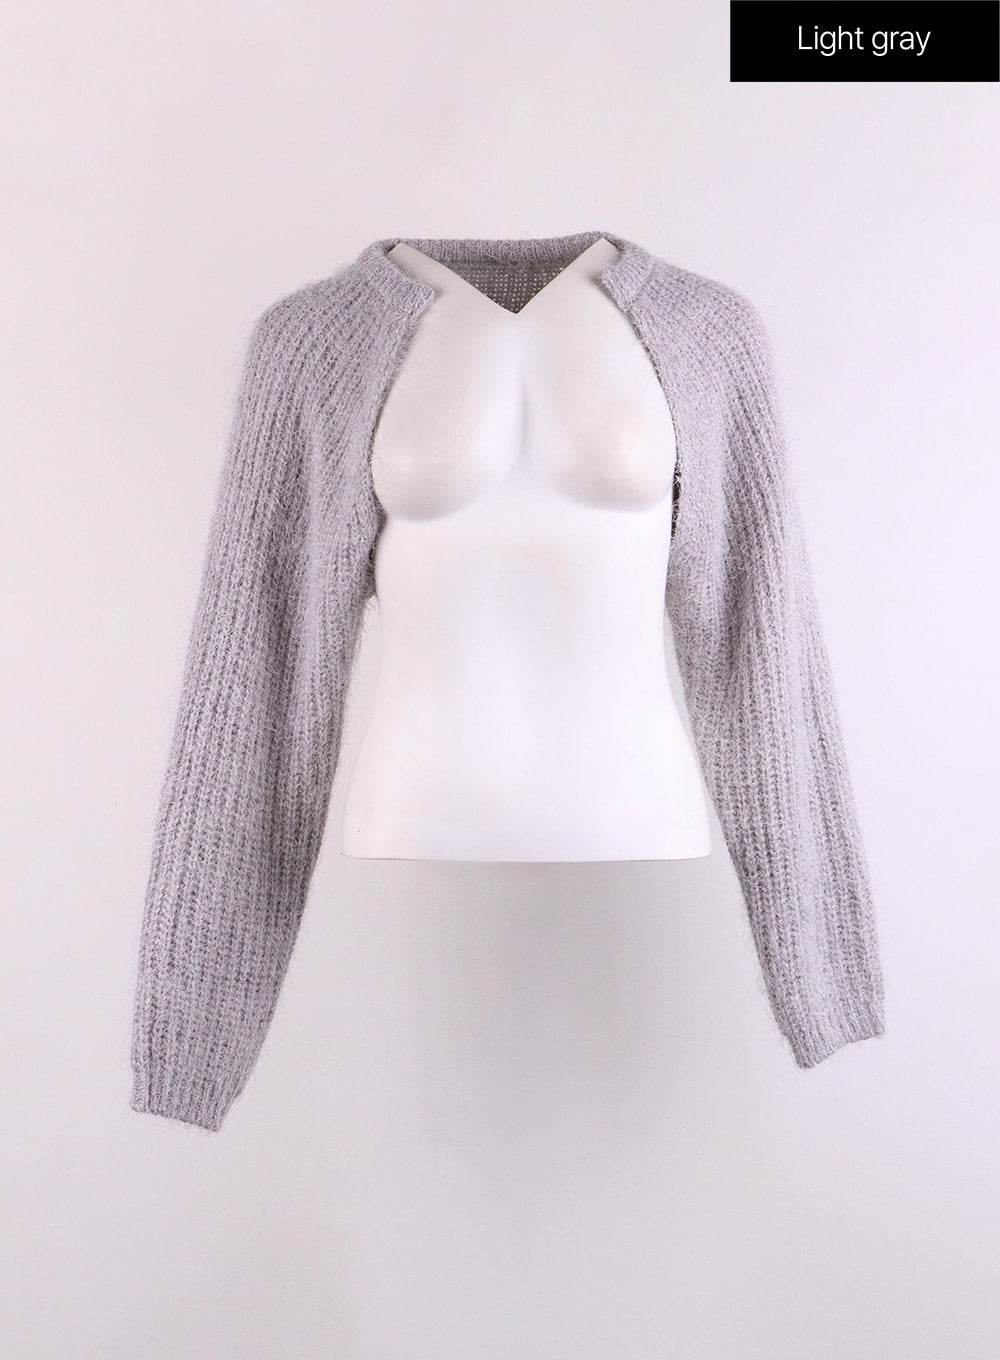 knitted-bolero-shrug-cj429 / Light gray